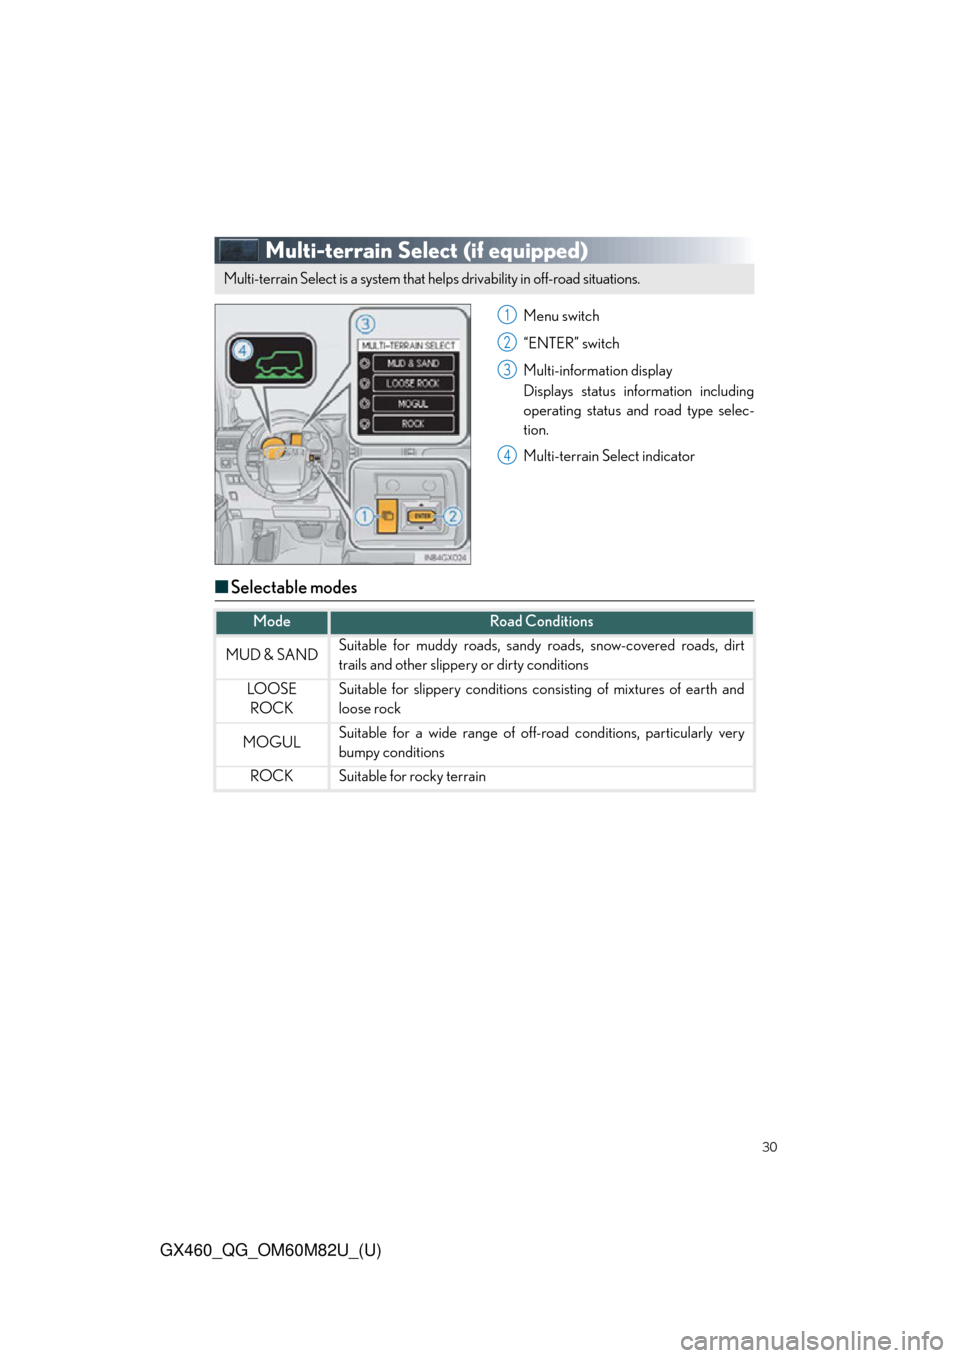 Lexus GX460 2016  Navigation Manual / LEXUS 2016 GX460  QUICK GUIDE (OM60M82U) Owners Manual 30
GX460_QG_OM60M82U_(U)
Multi-terrain Select (if equipped)
Menu switch
“ENTER” switch
Multi-information display
Displays status information including
operating status and road type selec-
tion.
M